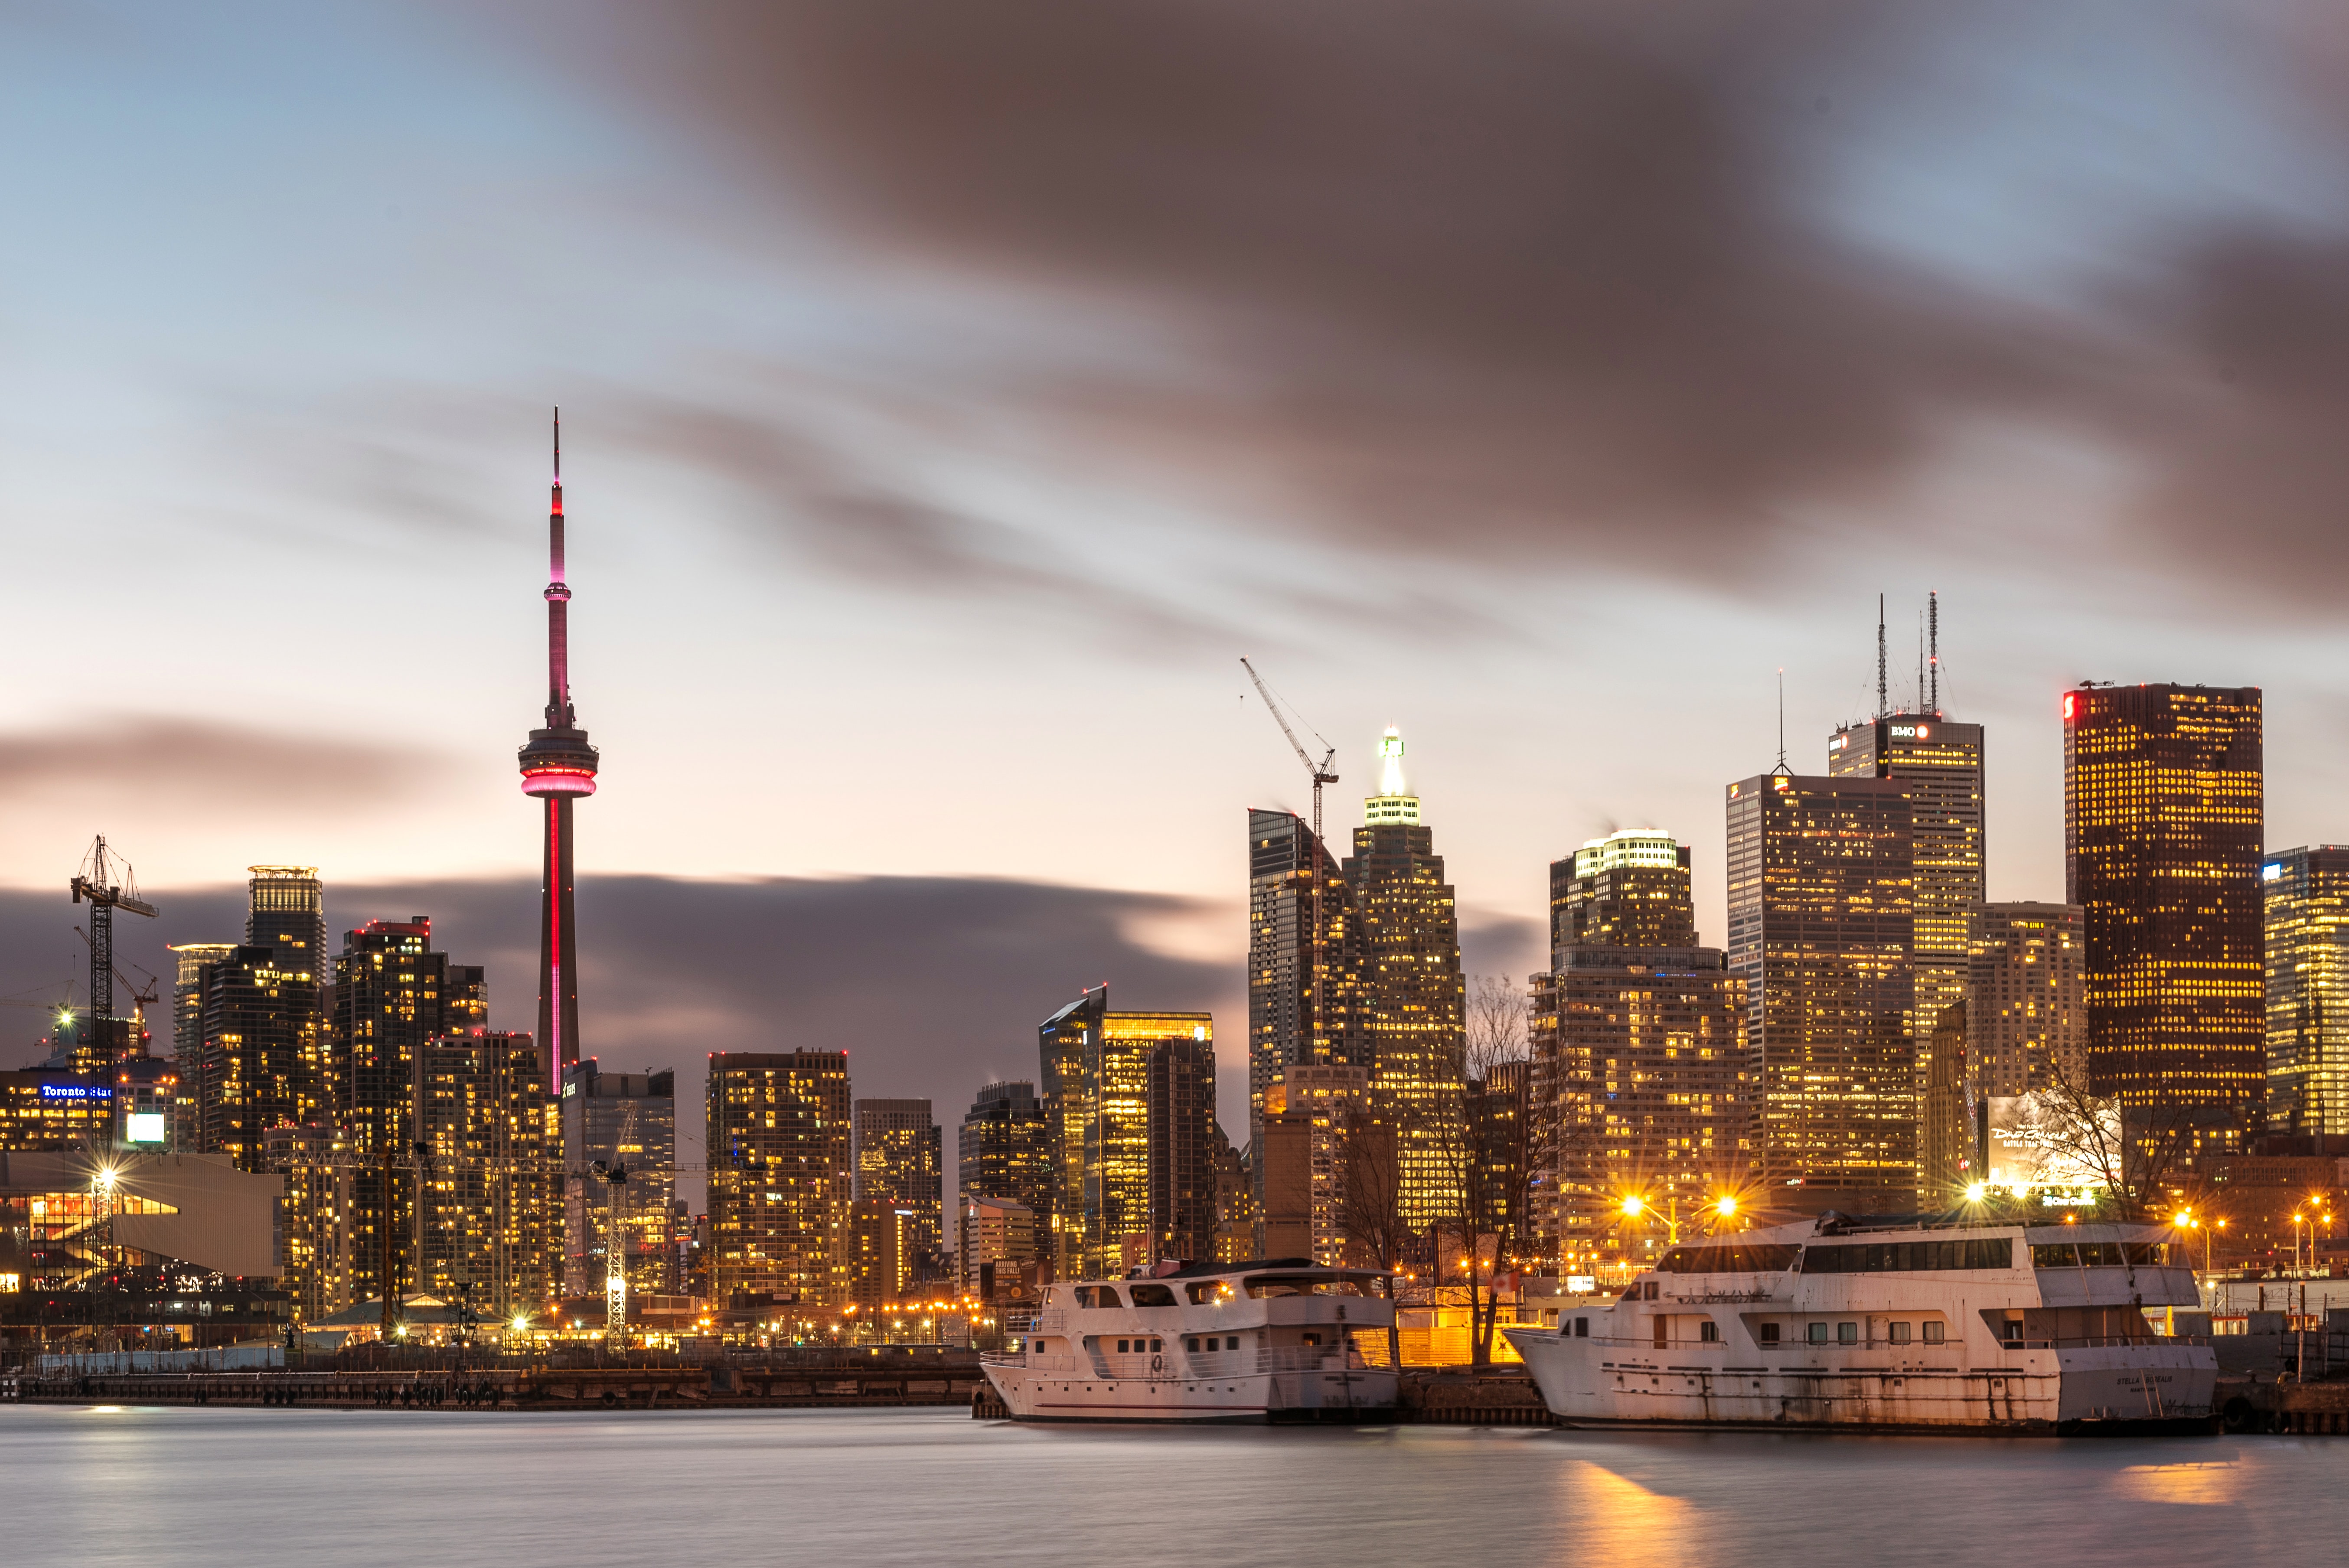 The city skyline of Toronto, Canada at dusk